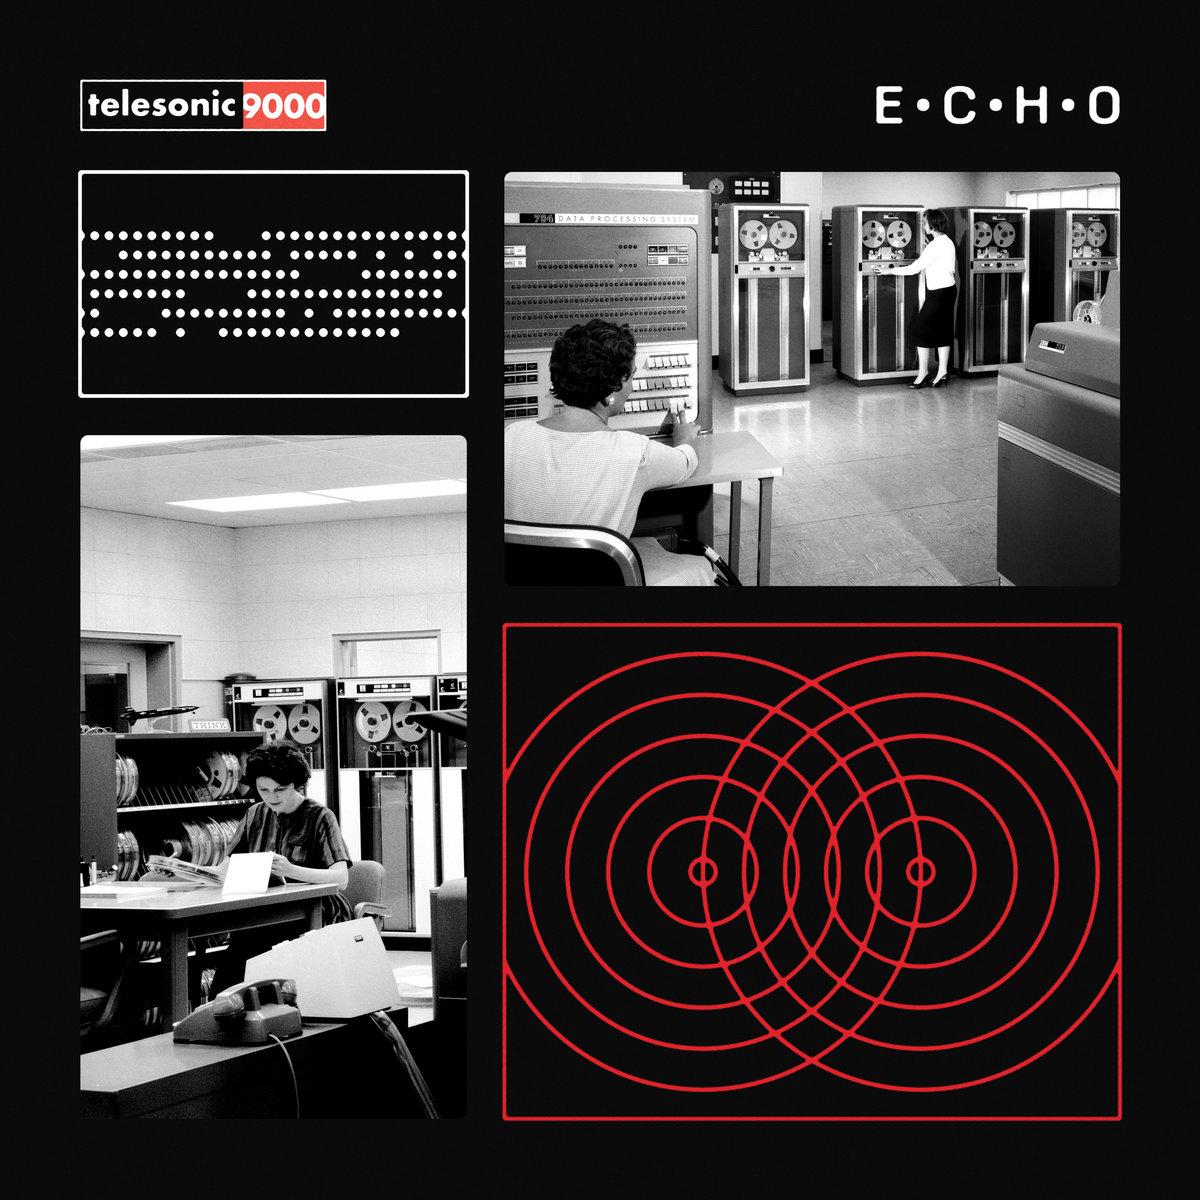 Telesonic 9000 ‘E.C.H.O.’ EP album artwork